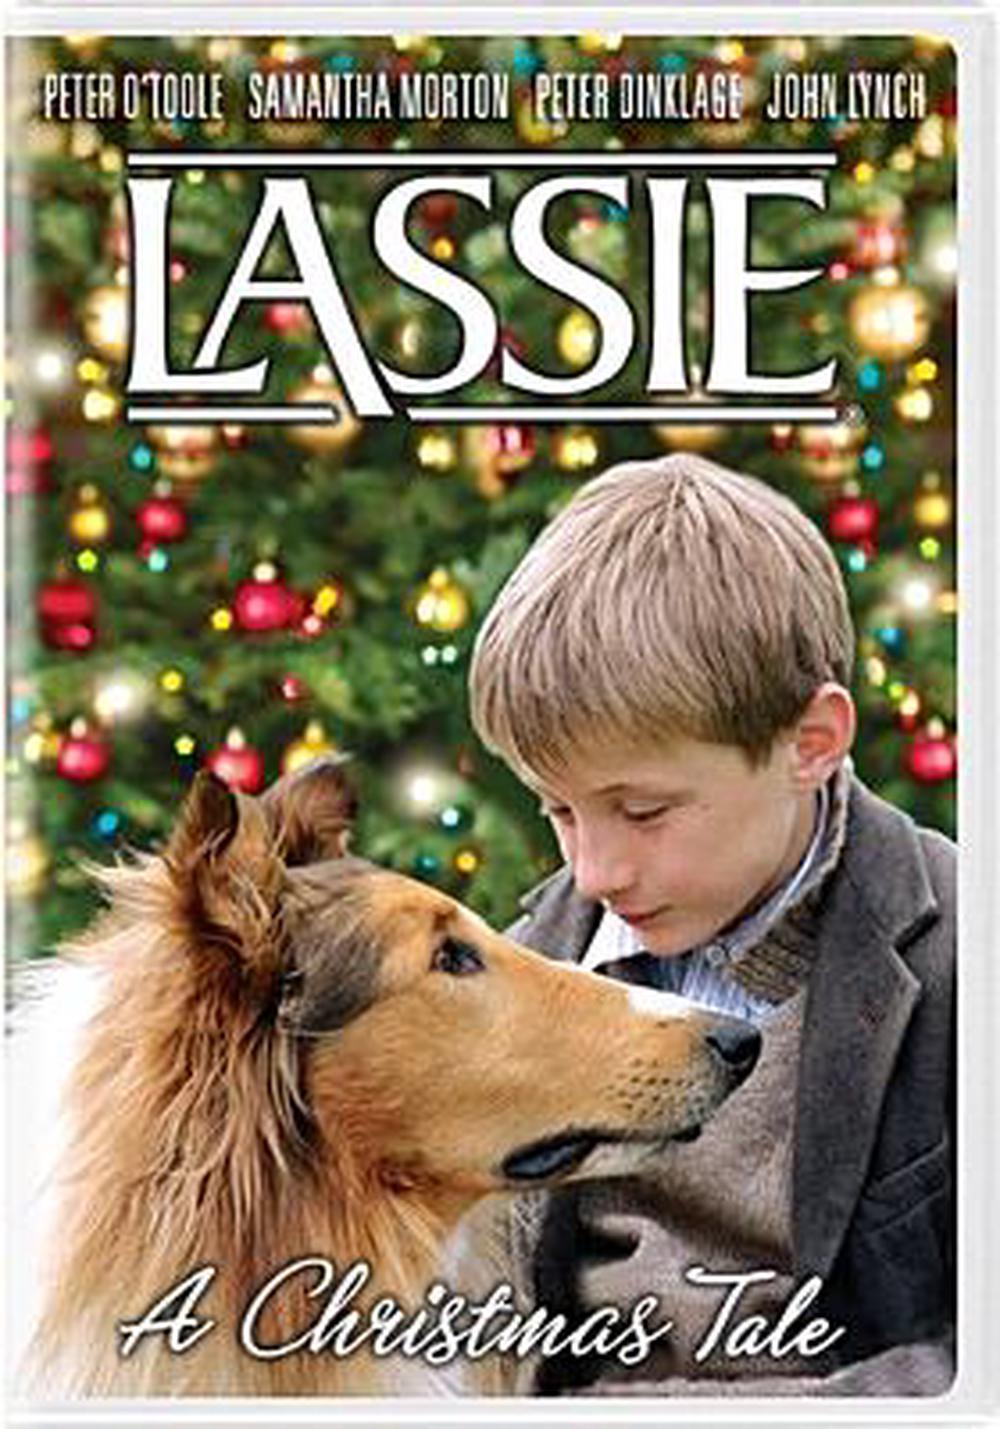 Lassie Dvd Region 1 Free Shipping 191329068212 Ebay